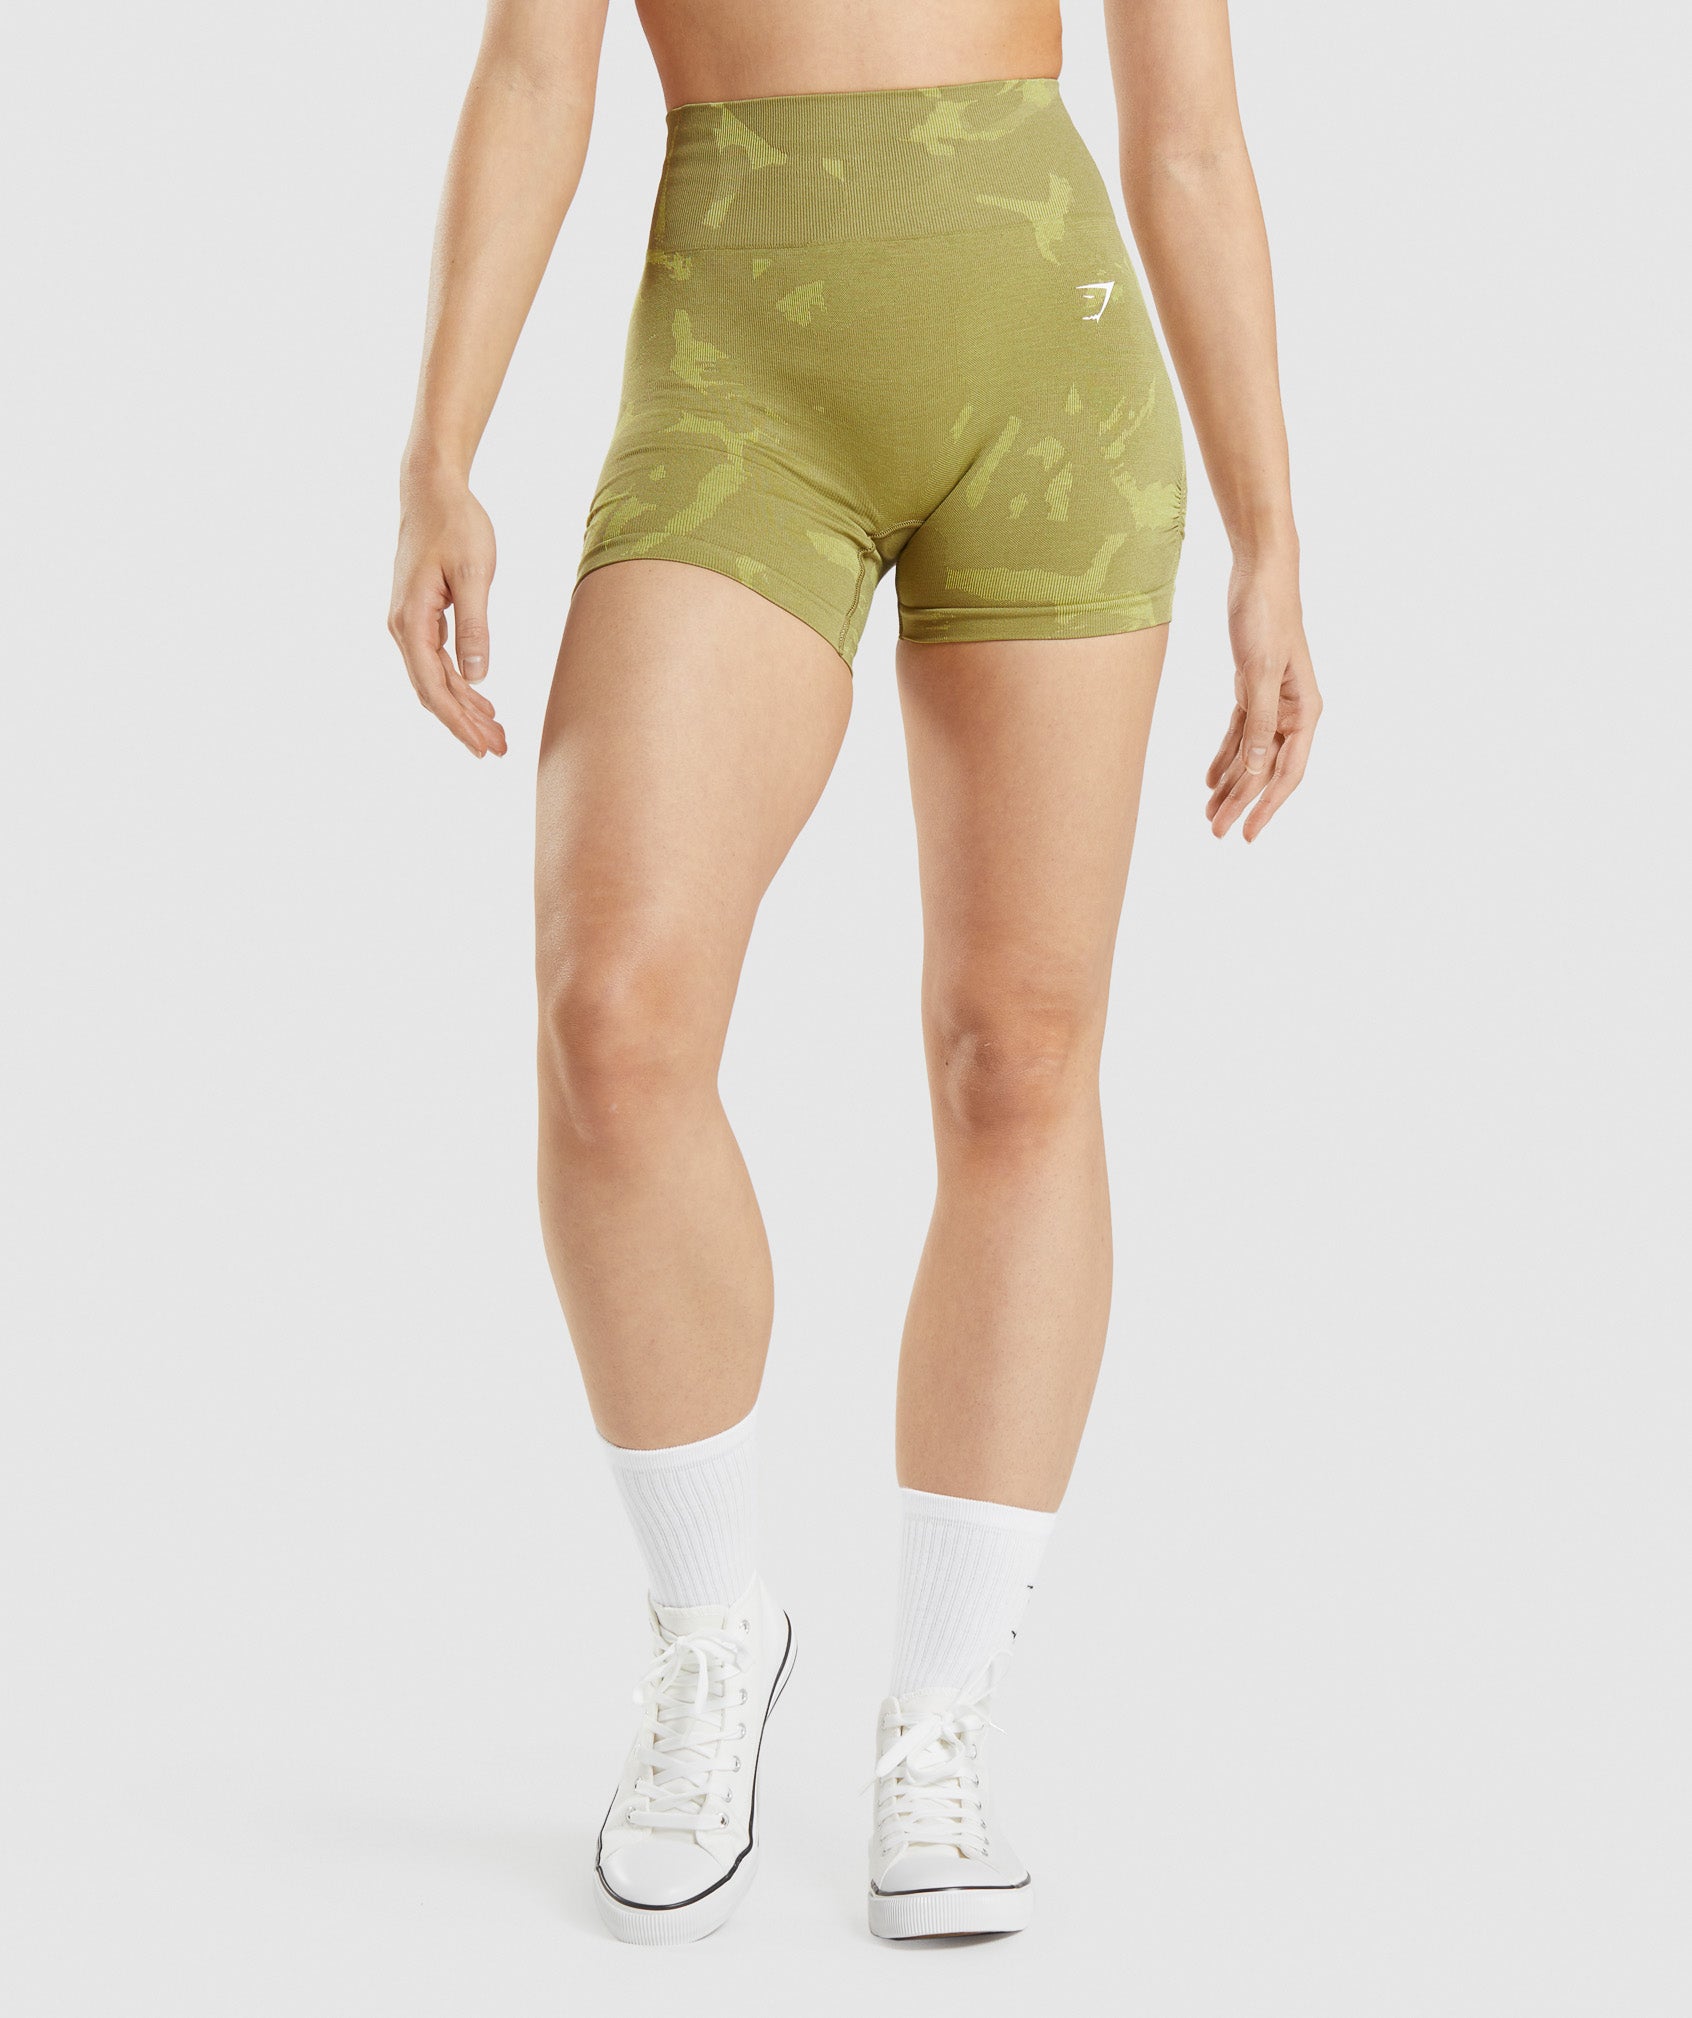 Gymshark NWOT Apex Seamless High Performance Lightweight Green Shorts Small  - $26 - From Trisha